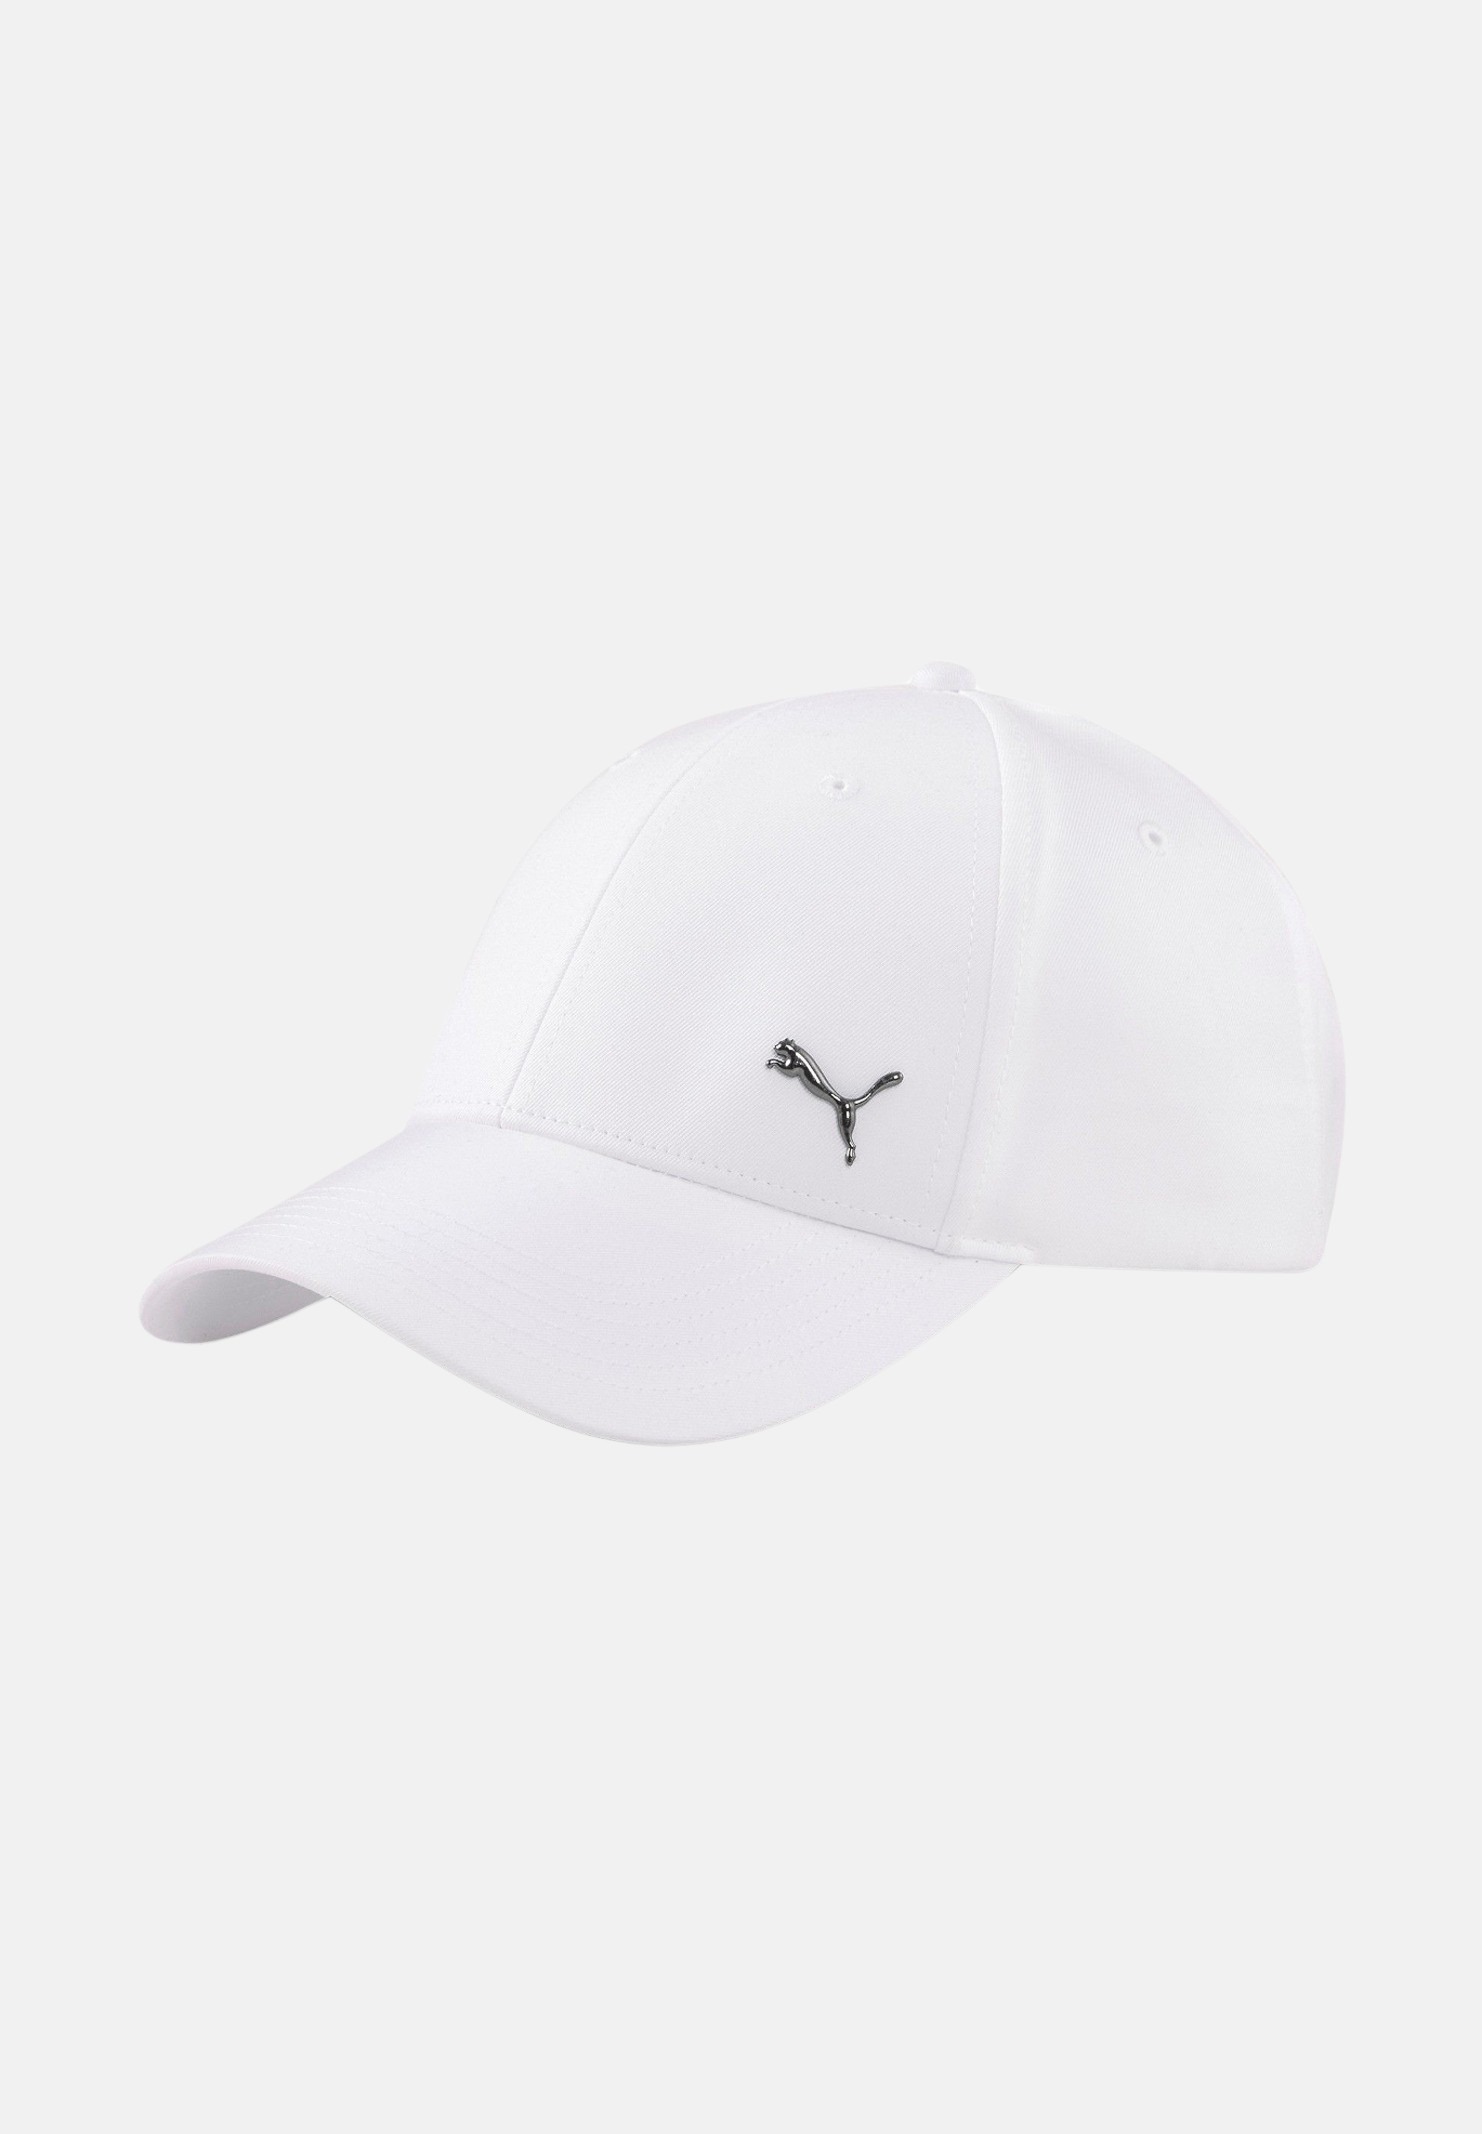 Cappello bianco con medaglietta del logo unisex - PUMA - Pavidas